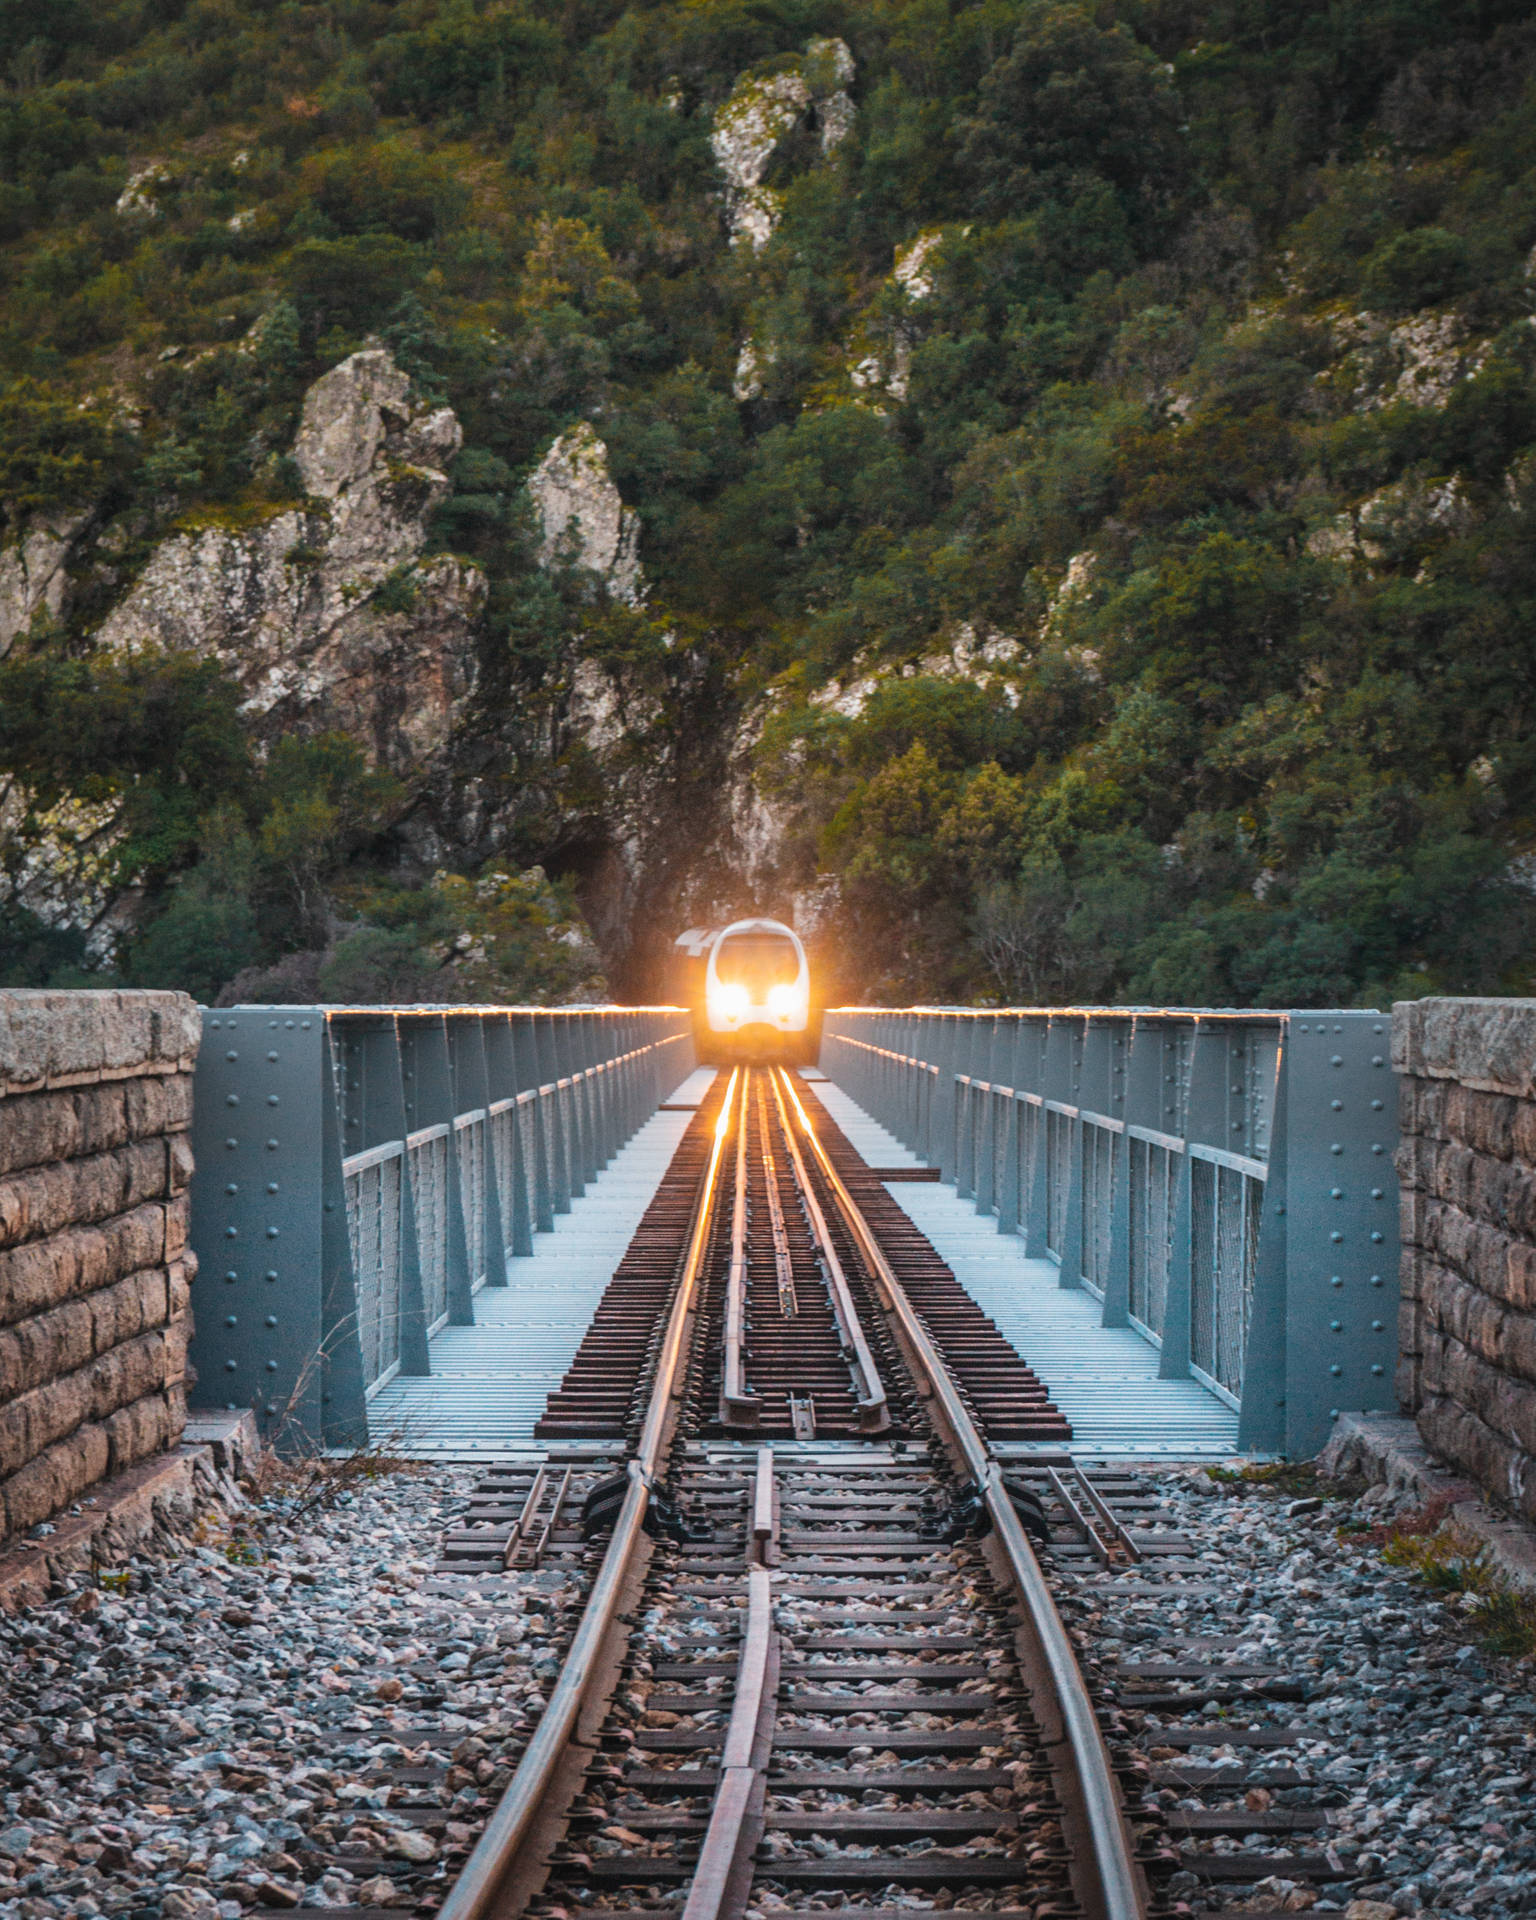 A train speeds across a bridge as it navigates its journey Wallpaper